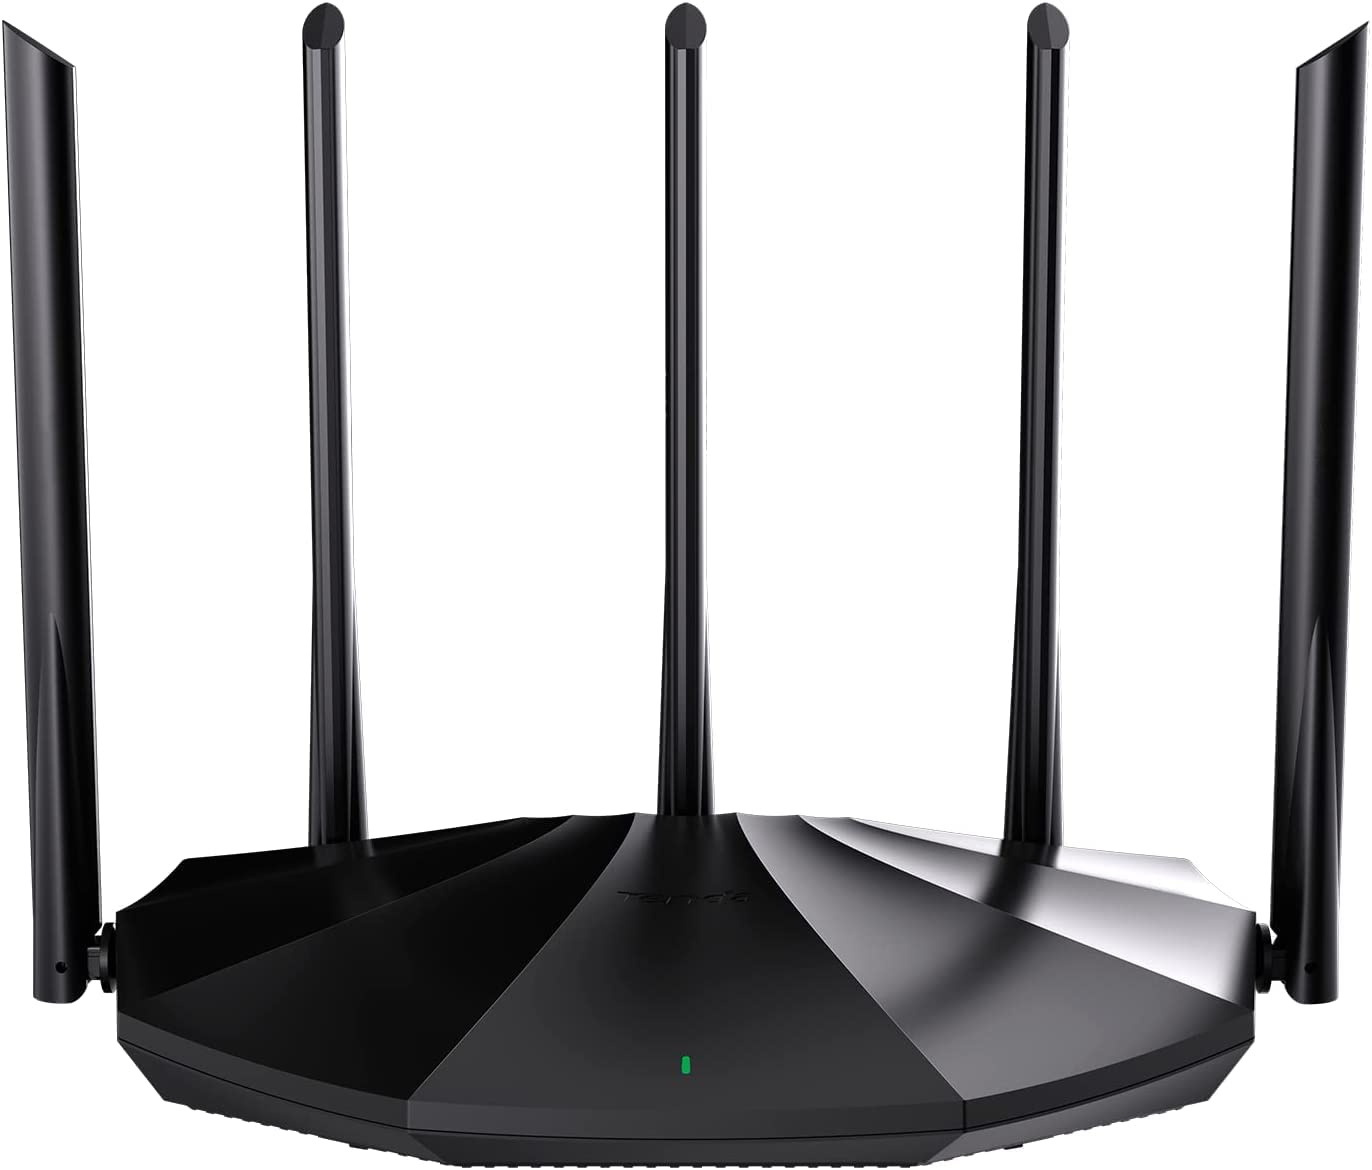 Tenda RX2 Pro WiFi 6 AX1500 Smart WiFi Router, Dual Band Gigabit Wireless Internet WiFi 6 Router, 5 * 6dBi High-Gain Antennas, 3 Gigabit LAN Ports, WPA3+OFDMA+MU-MIMO (Black)